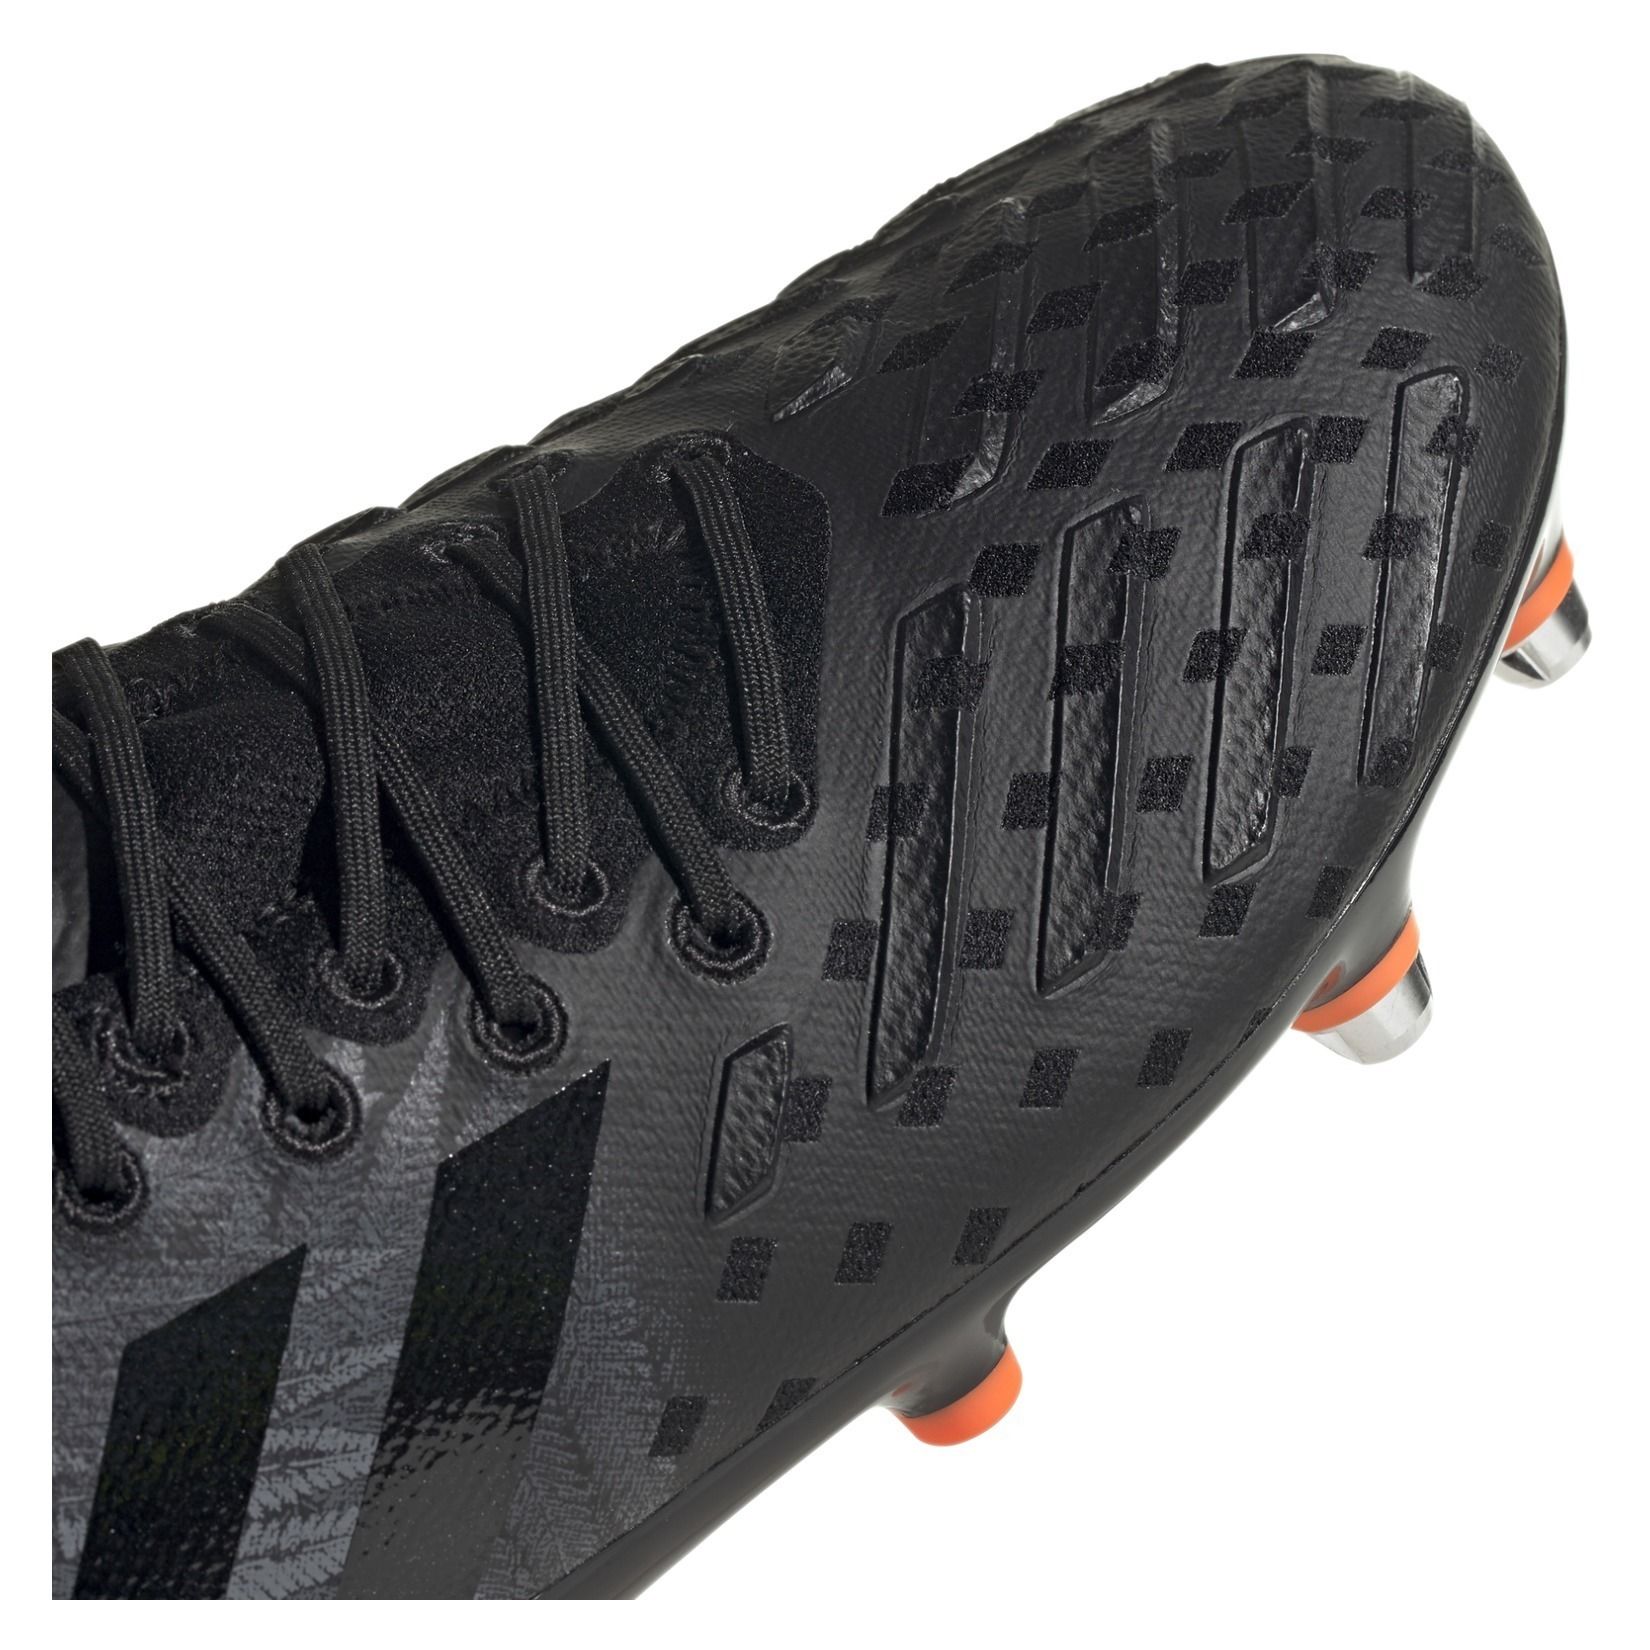 Adidas-LP Predator Xp Soft Ground Boots